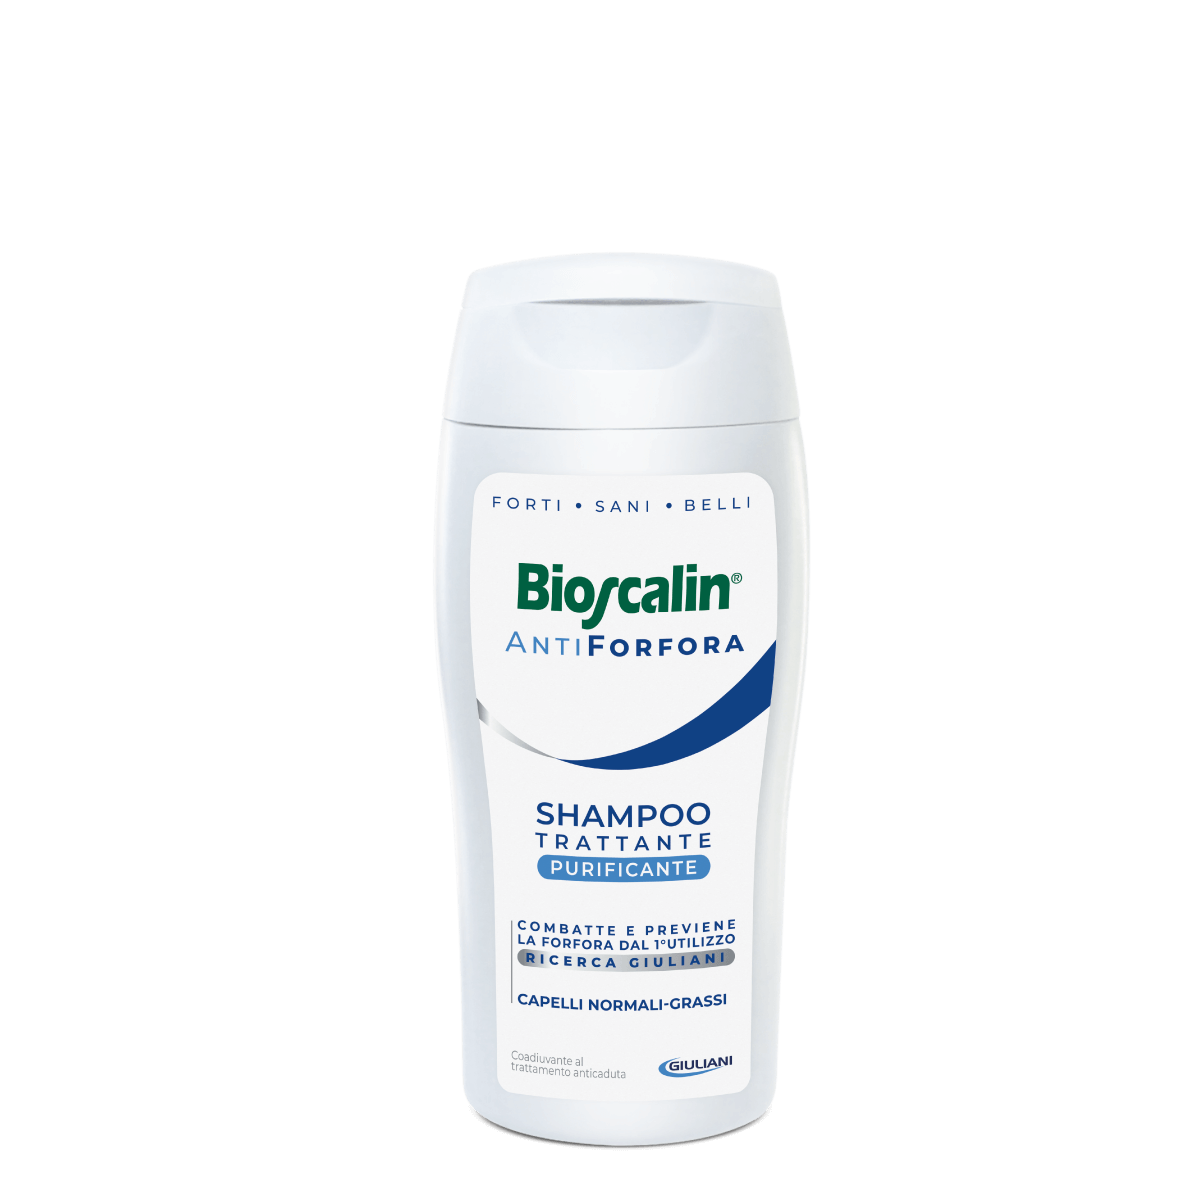 Image of Bioscalin(R) Antiforfora Shampoo Trattante Purificante Giuliani 200ml